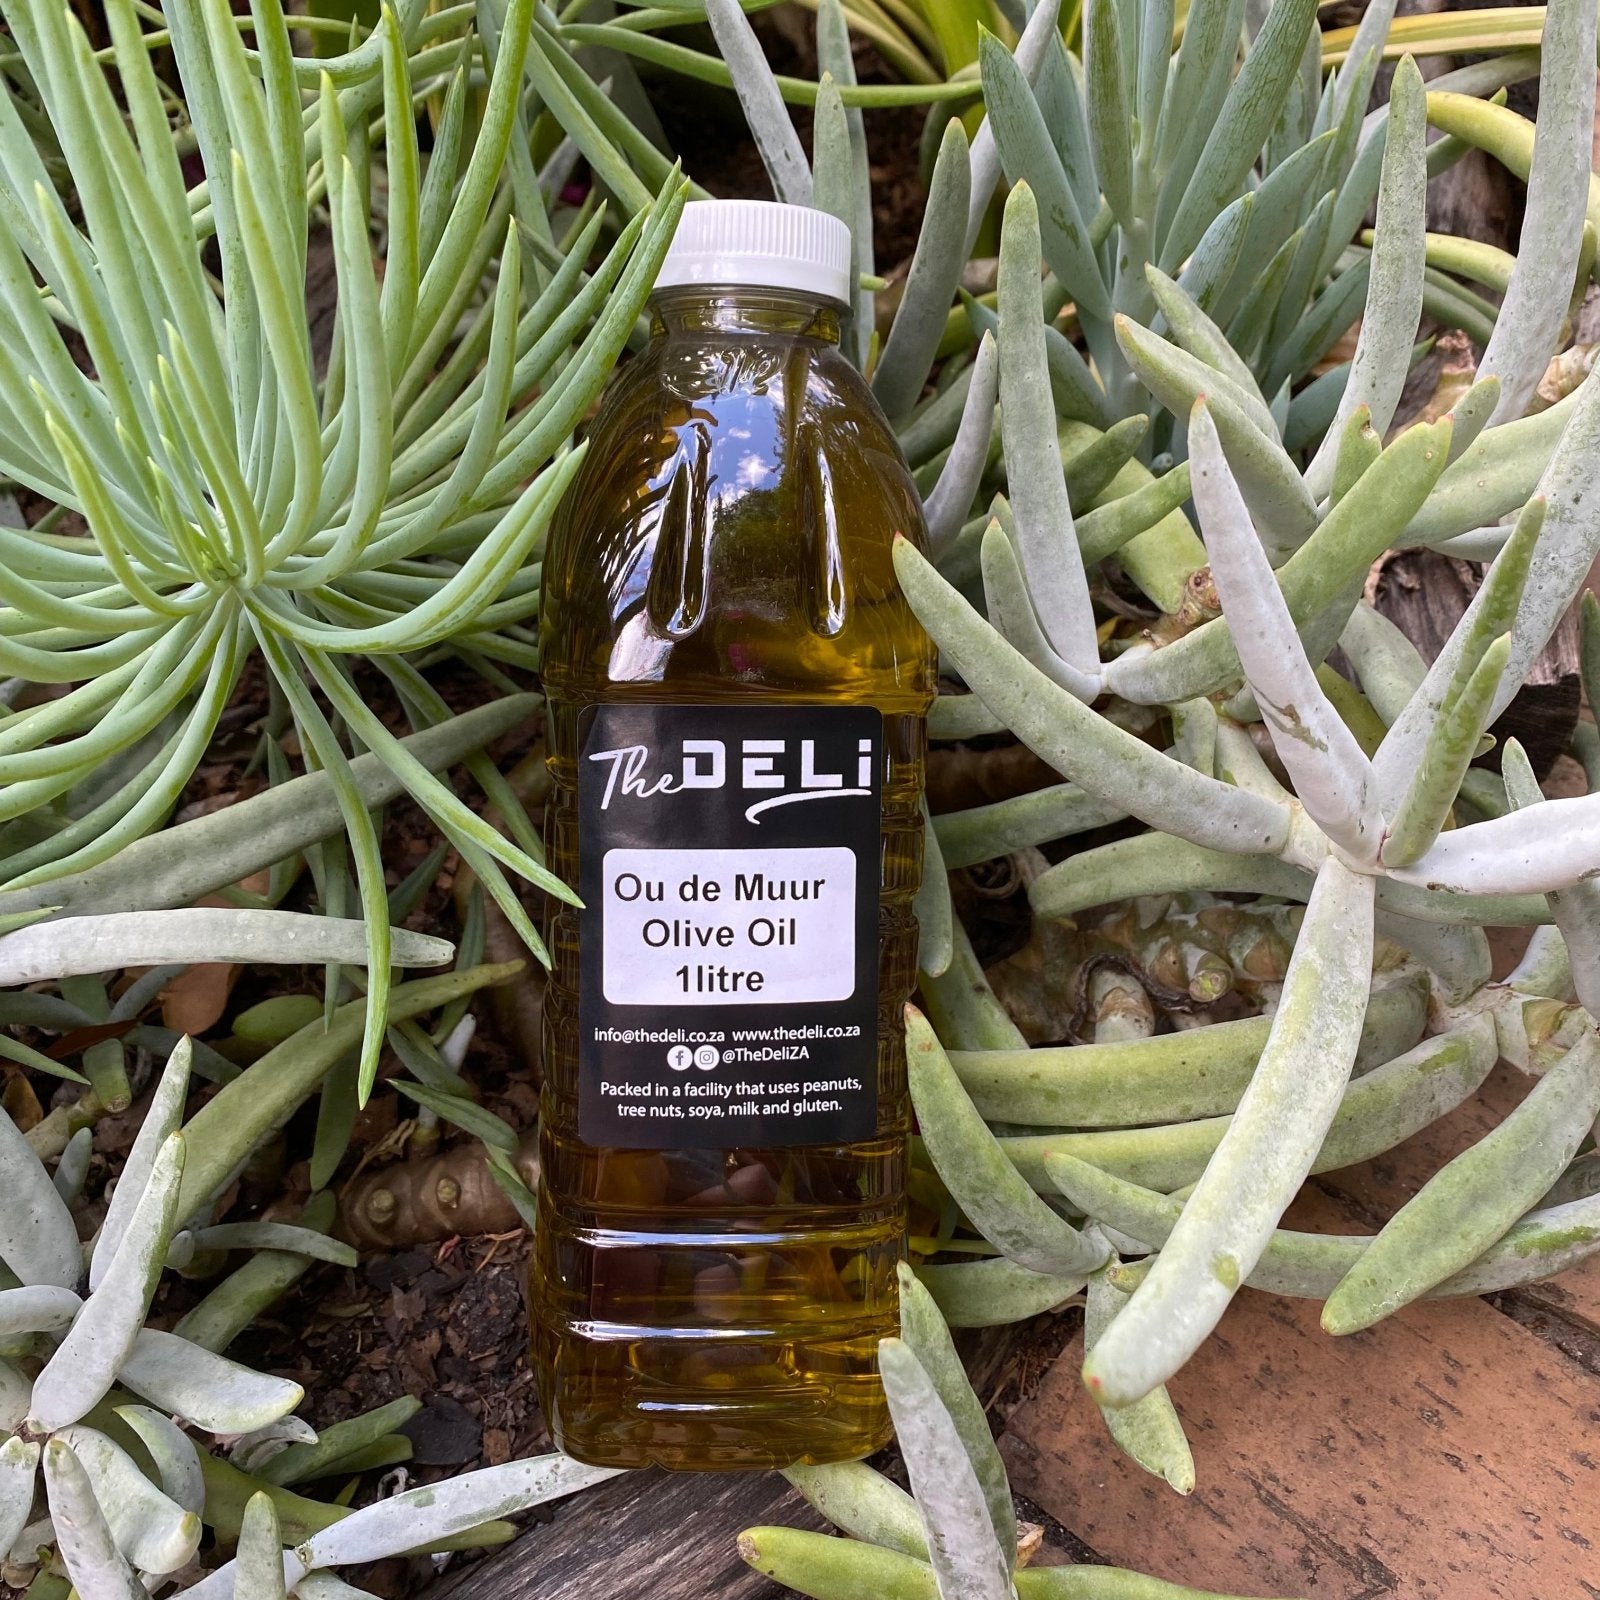 Oude Muur Extra Virgin Olive Oil (1l) - The Deli